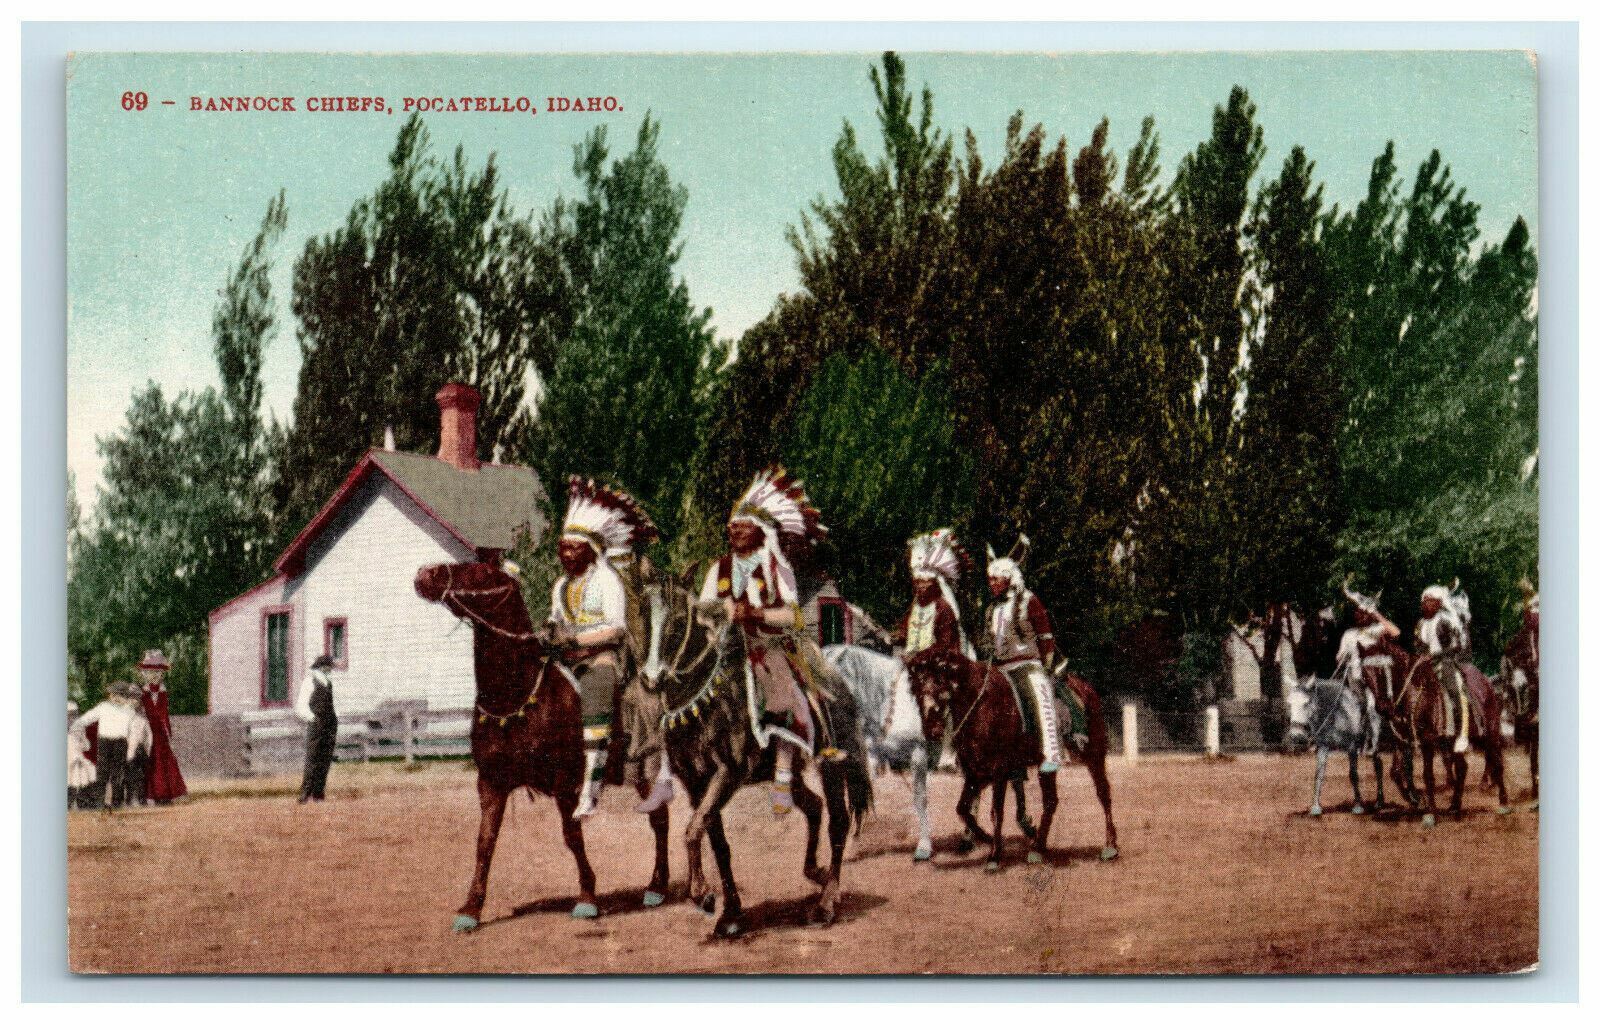 Bannock Chiefs Pocatello Idaho Postcard Native American Indians Horses